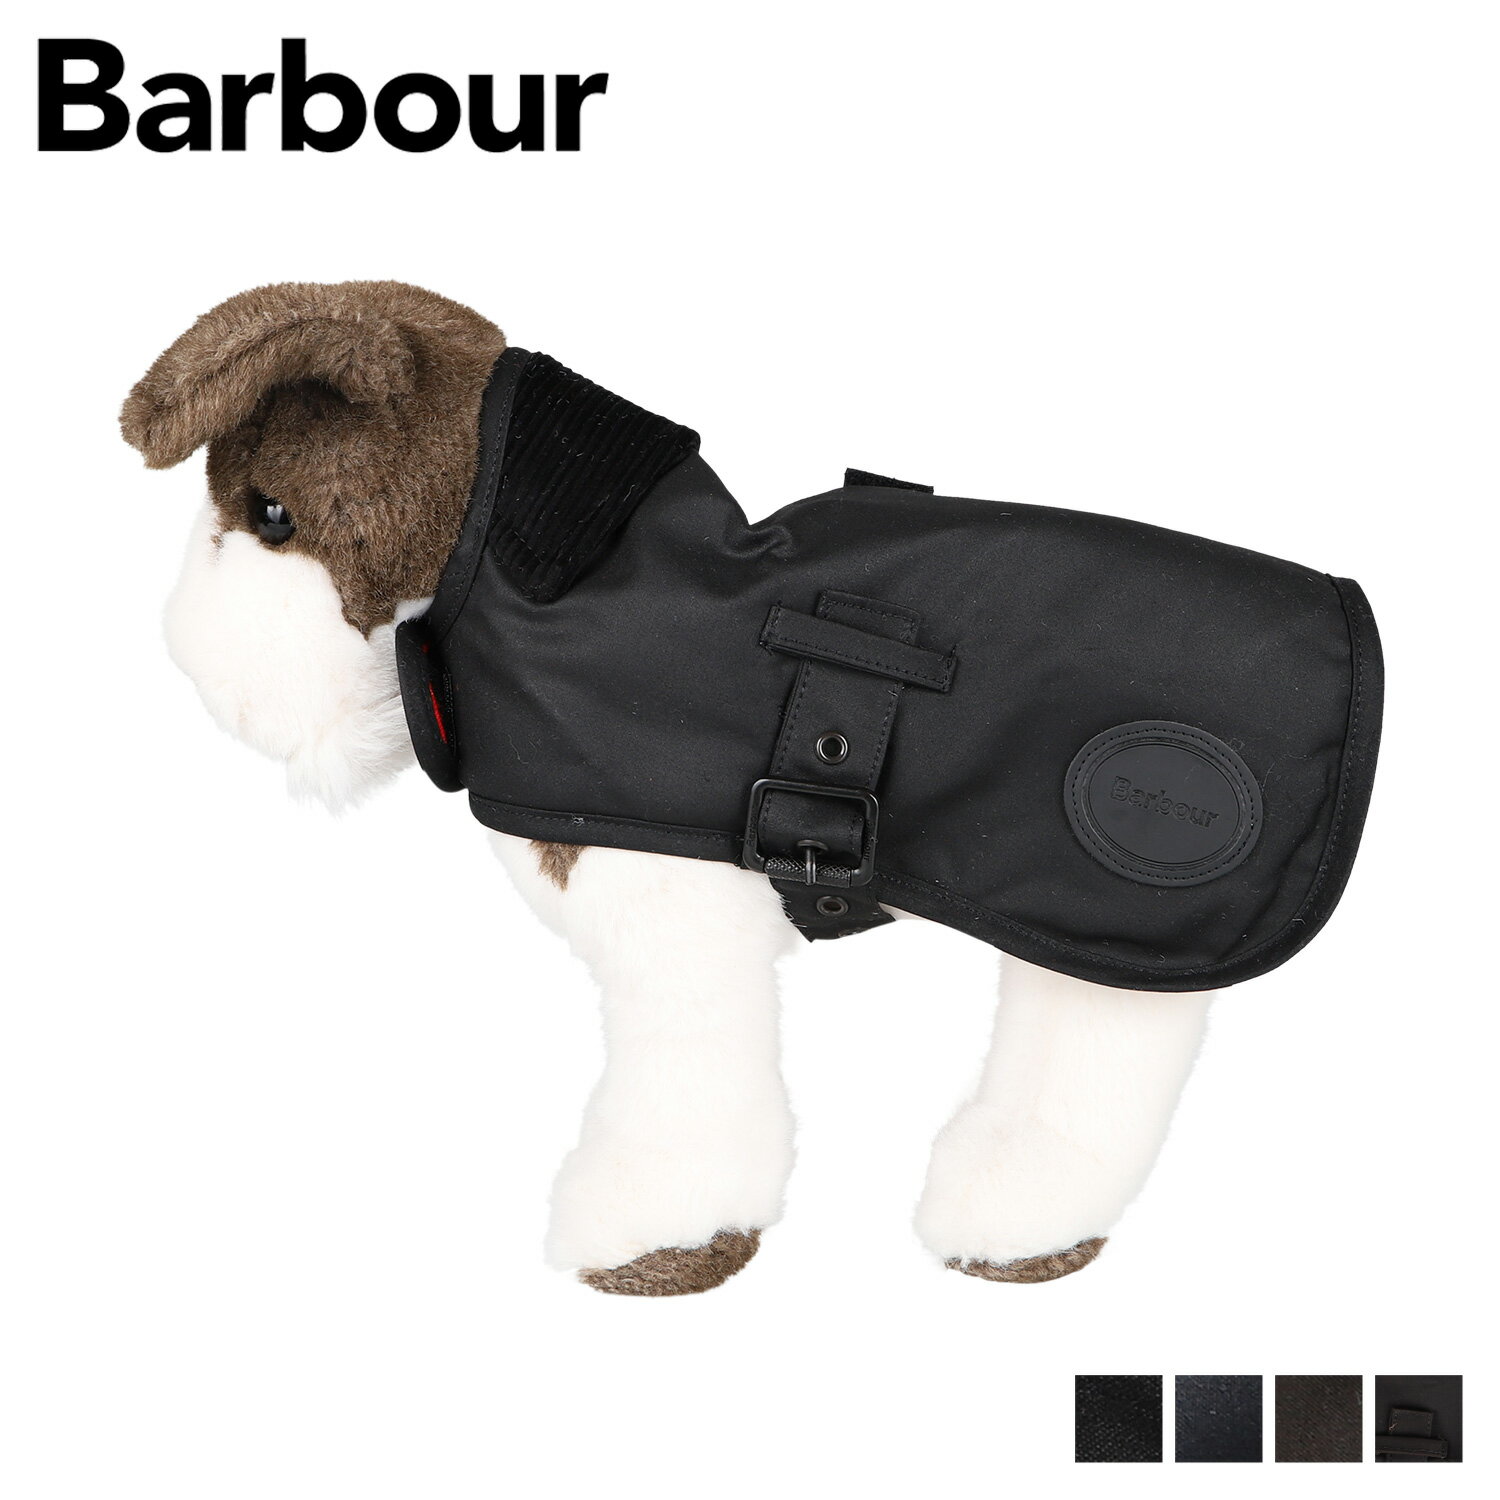 Barbour バブアー ドッグウェア カジュアル 犬服 コート Wax Dog Coat ブラック ネイビー オリーブ ブラウン 黒 DCO0003